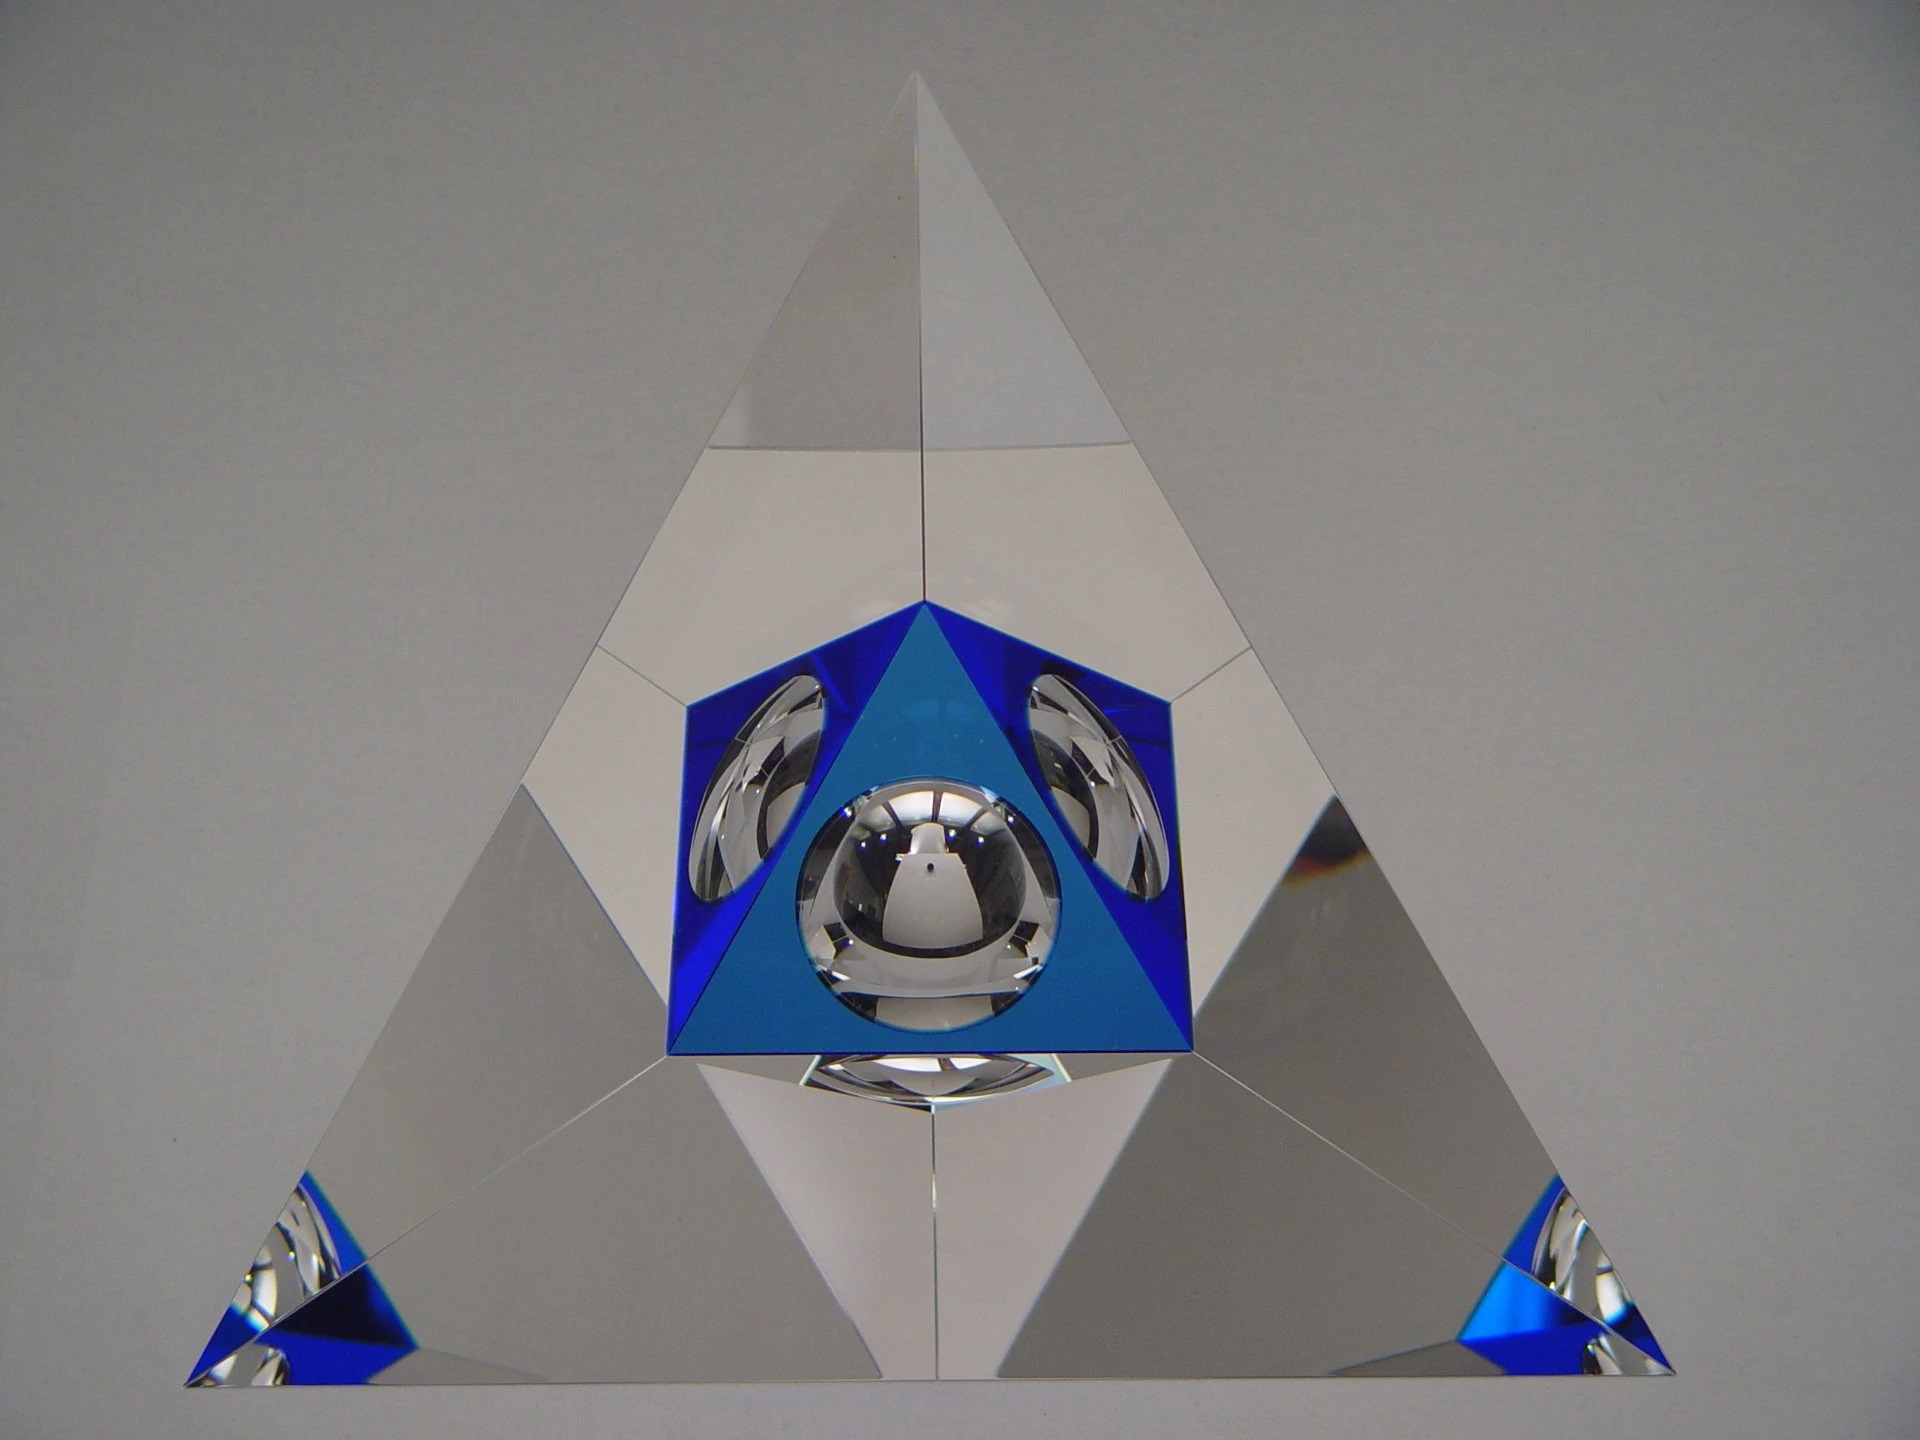 J. Frydrych - Sculpture: Pyramida v trojuhelniku